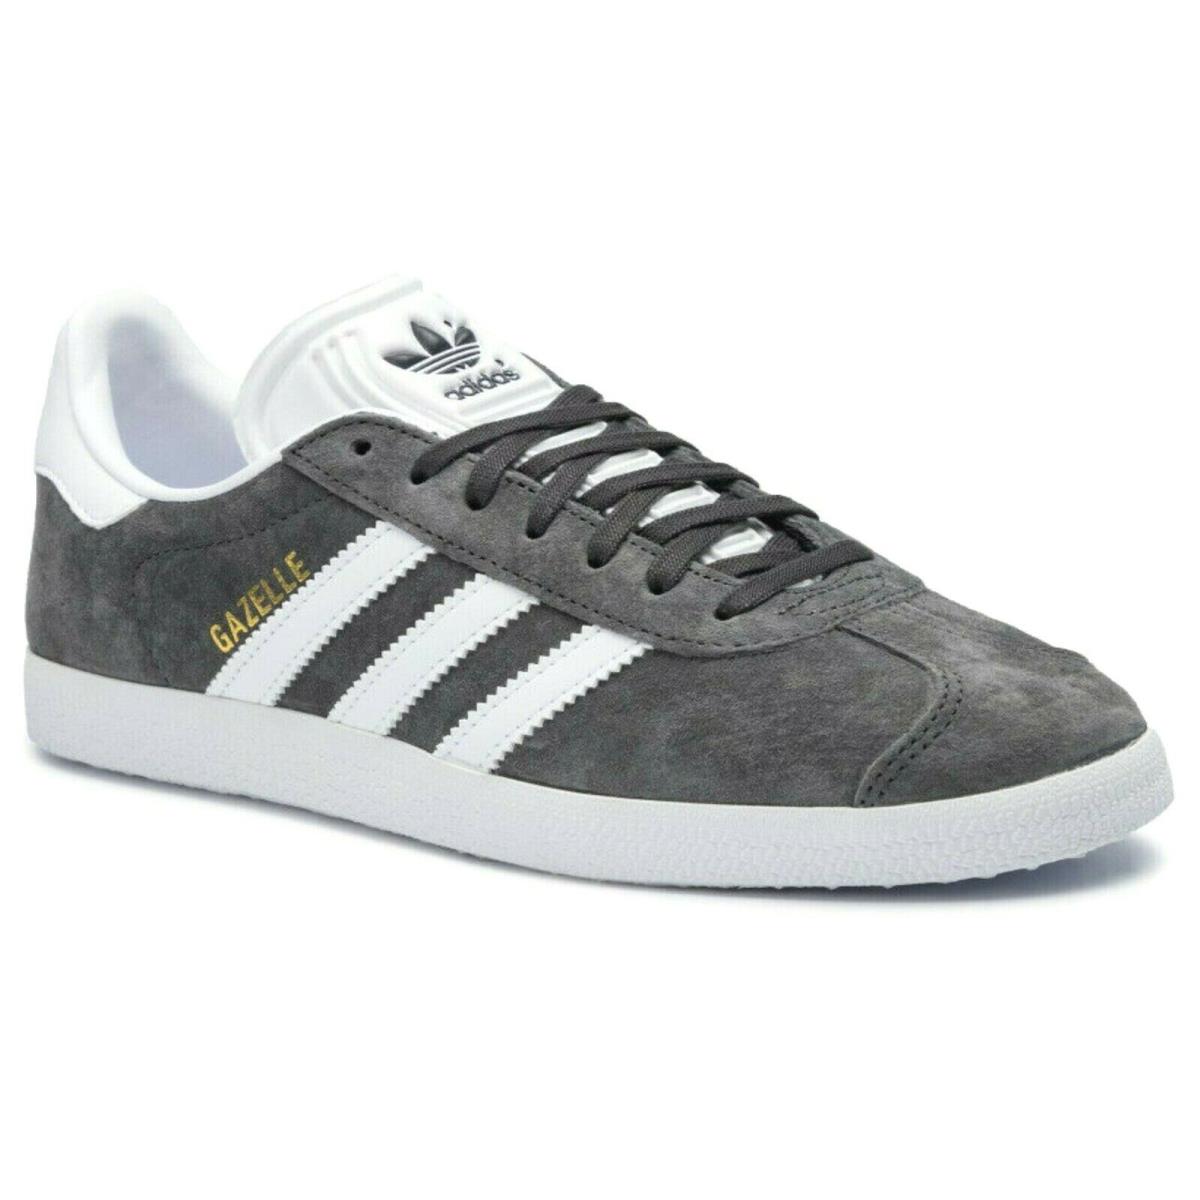 Adidas Originals Gazelle Mens Shoes - Grey/white BB5480 - All Sizes